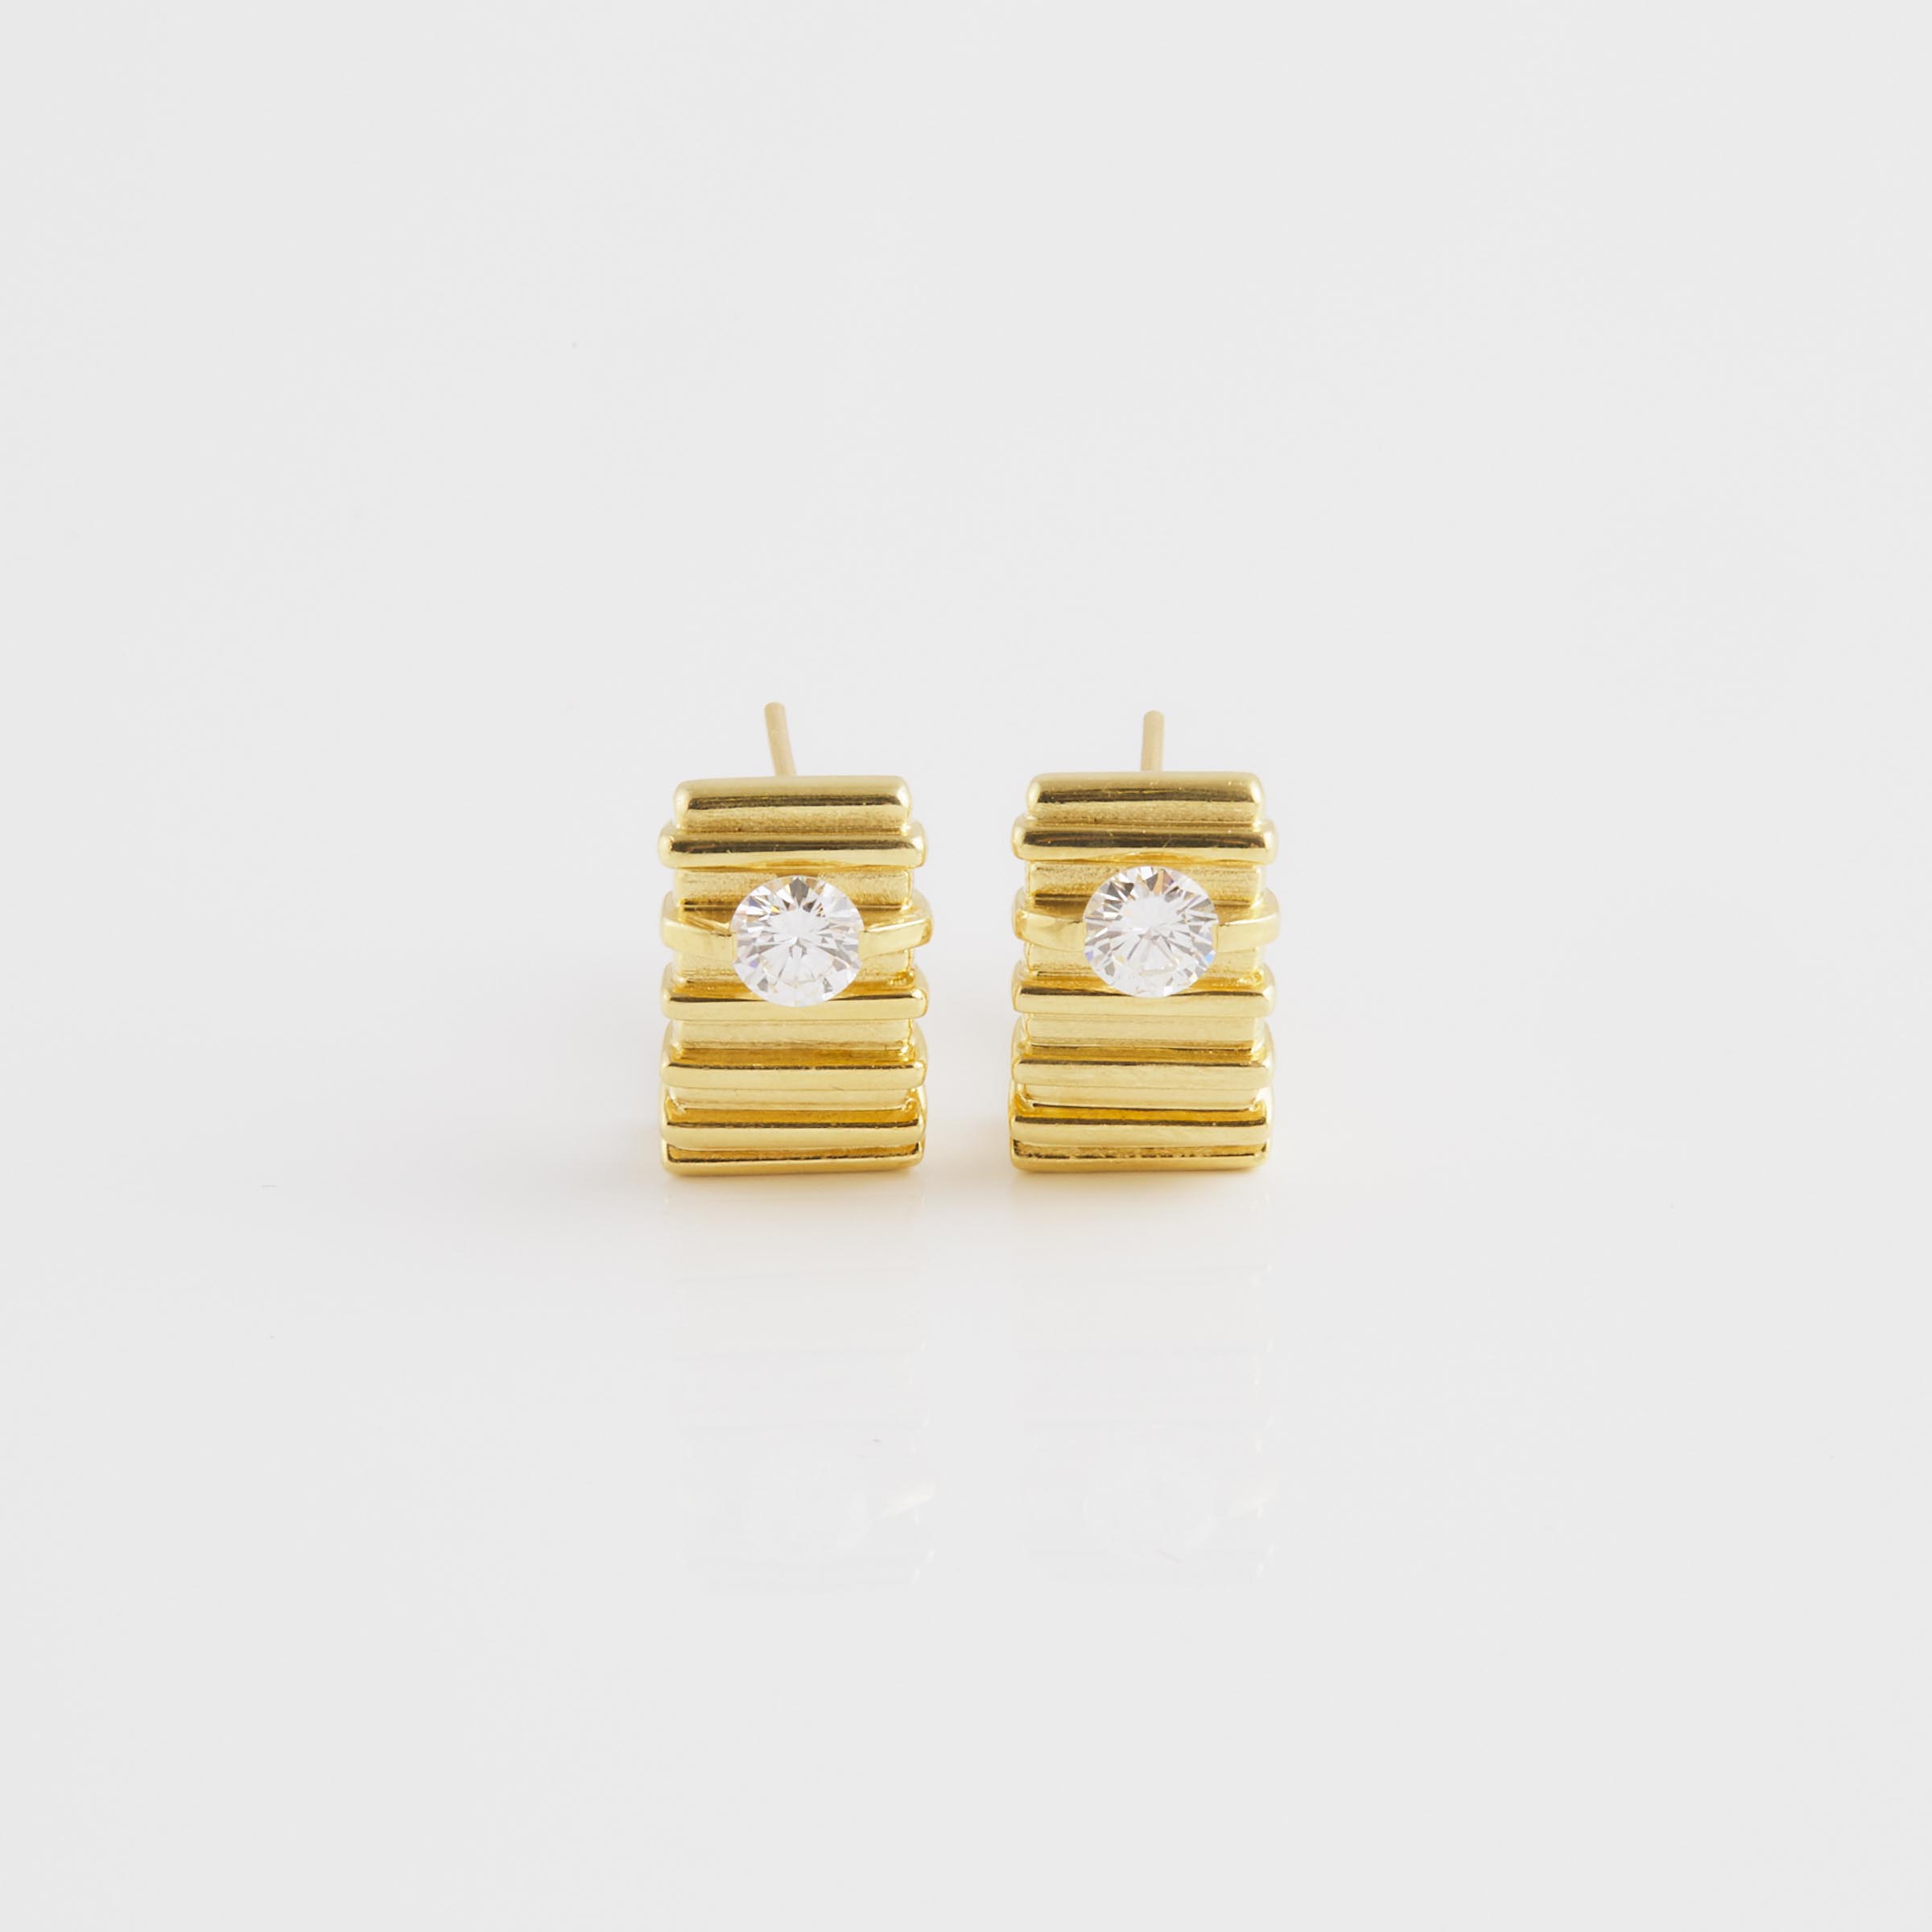 Pair Of 18k Yellow Gold Earrings